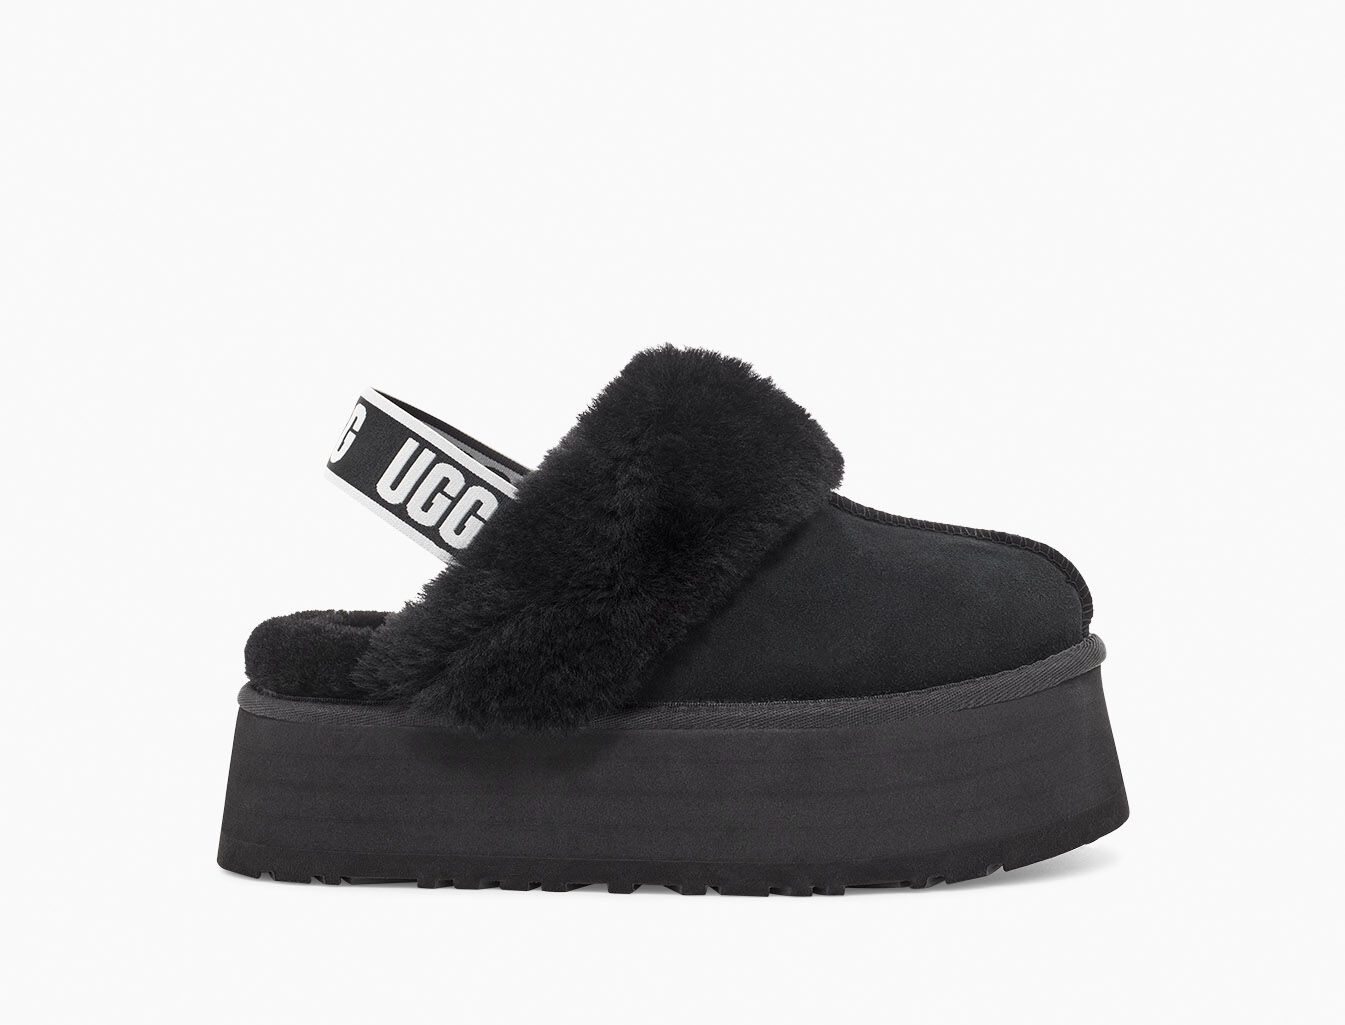 ugg slippers black